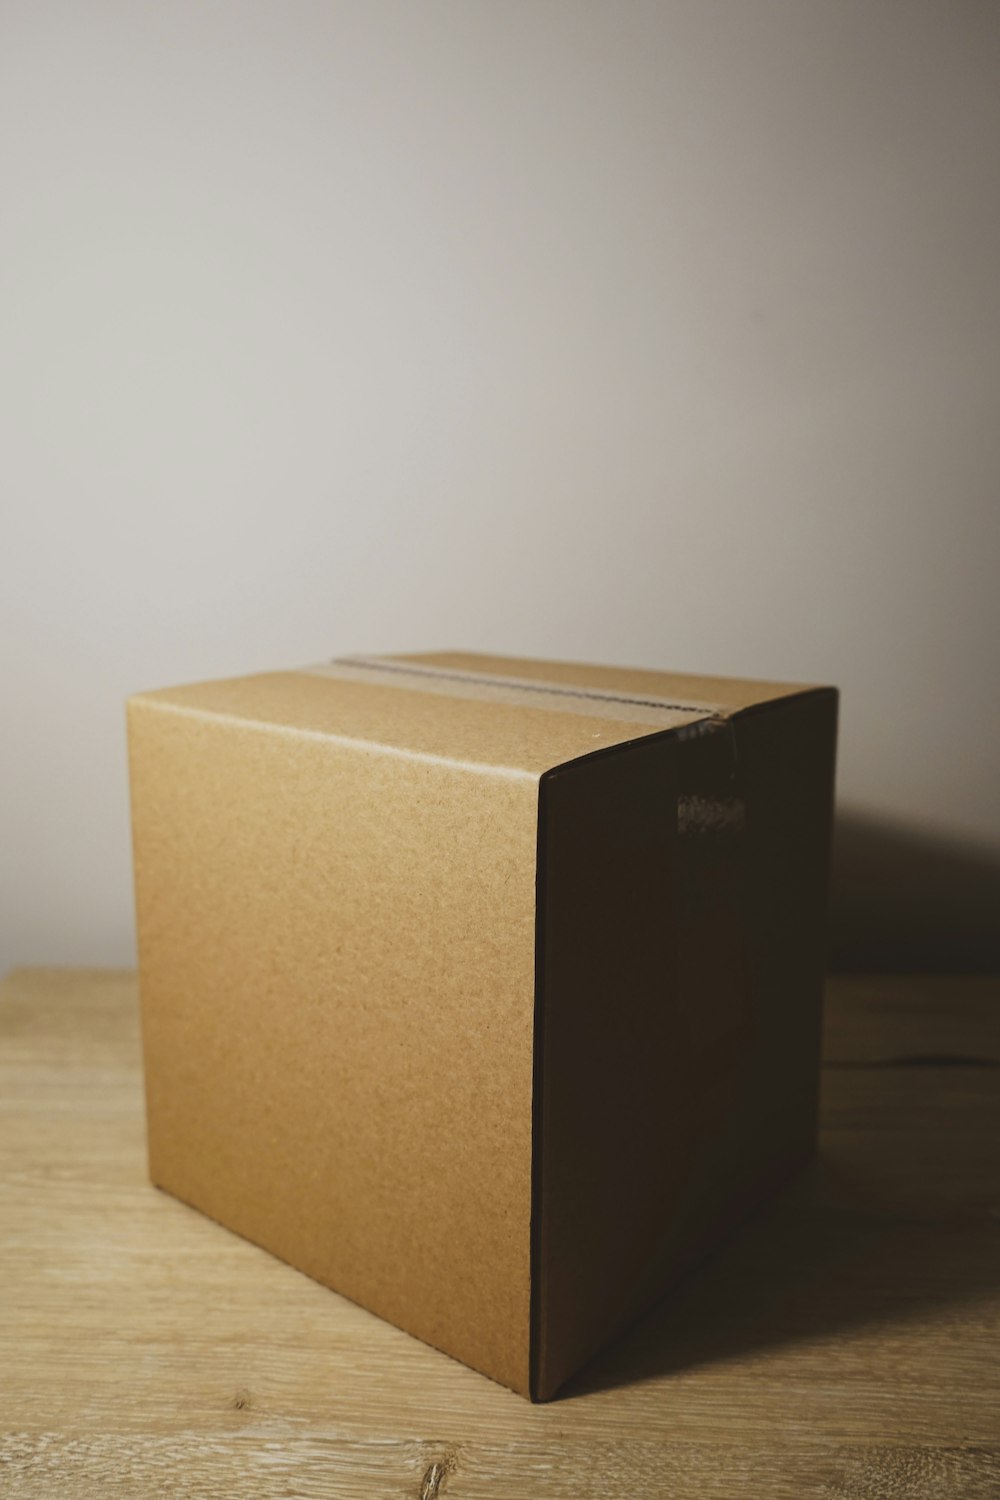 shallow focus photo of brown cardboard box